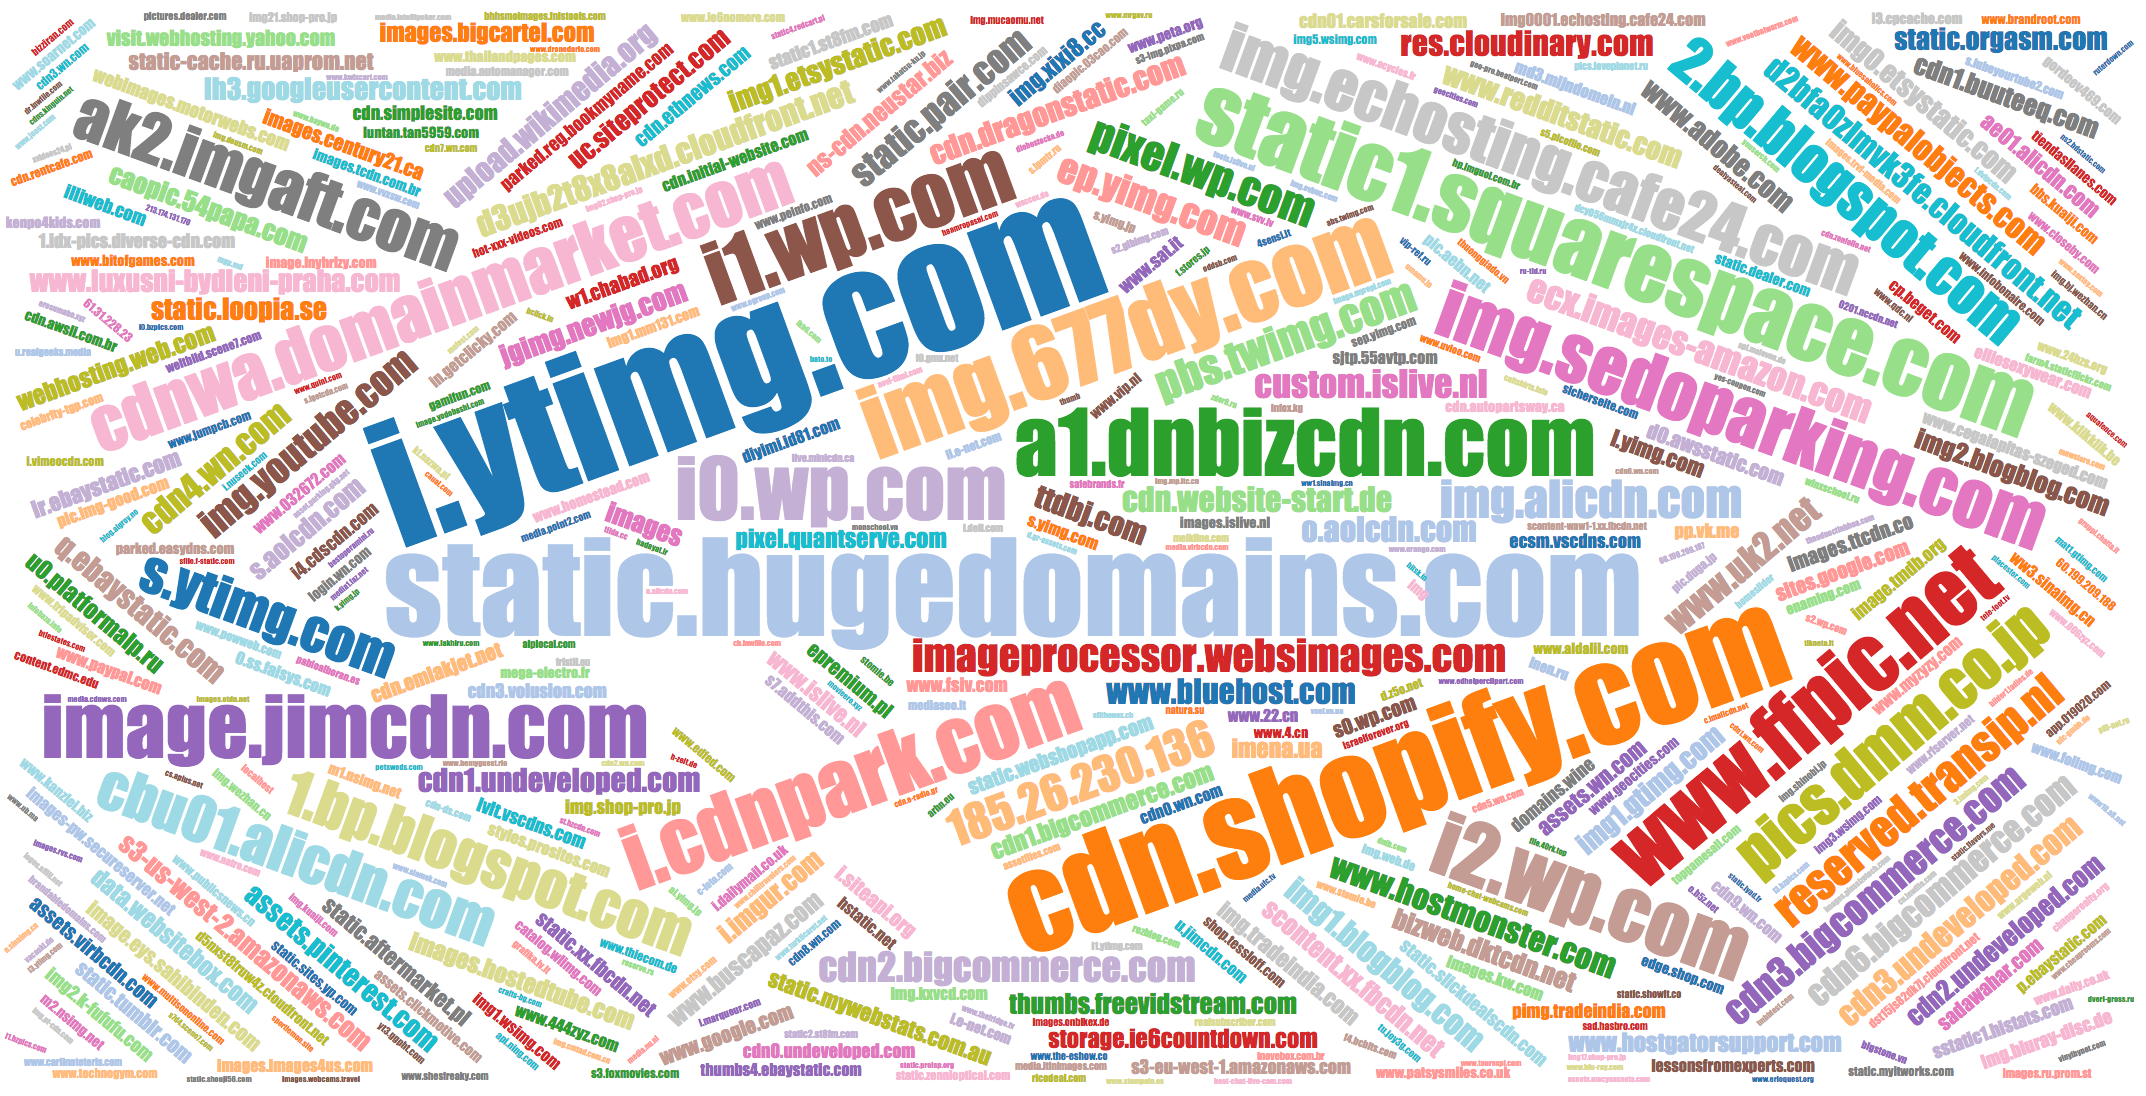 Popular names of IMG domains video.tan5959.com, video.tan9797.com, etc.